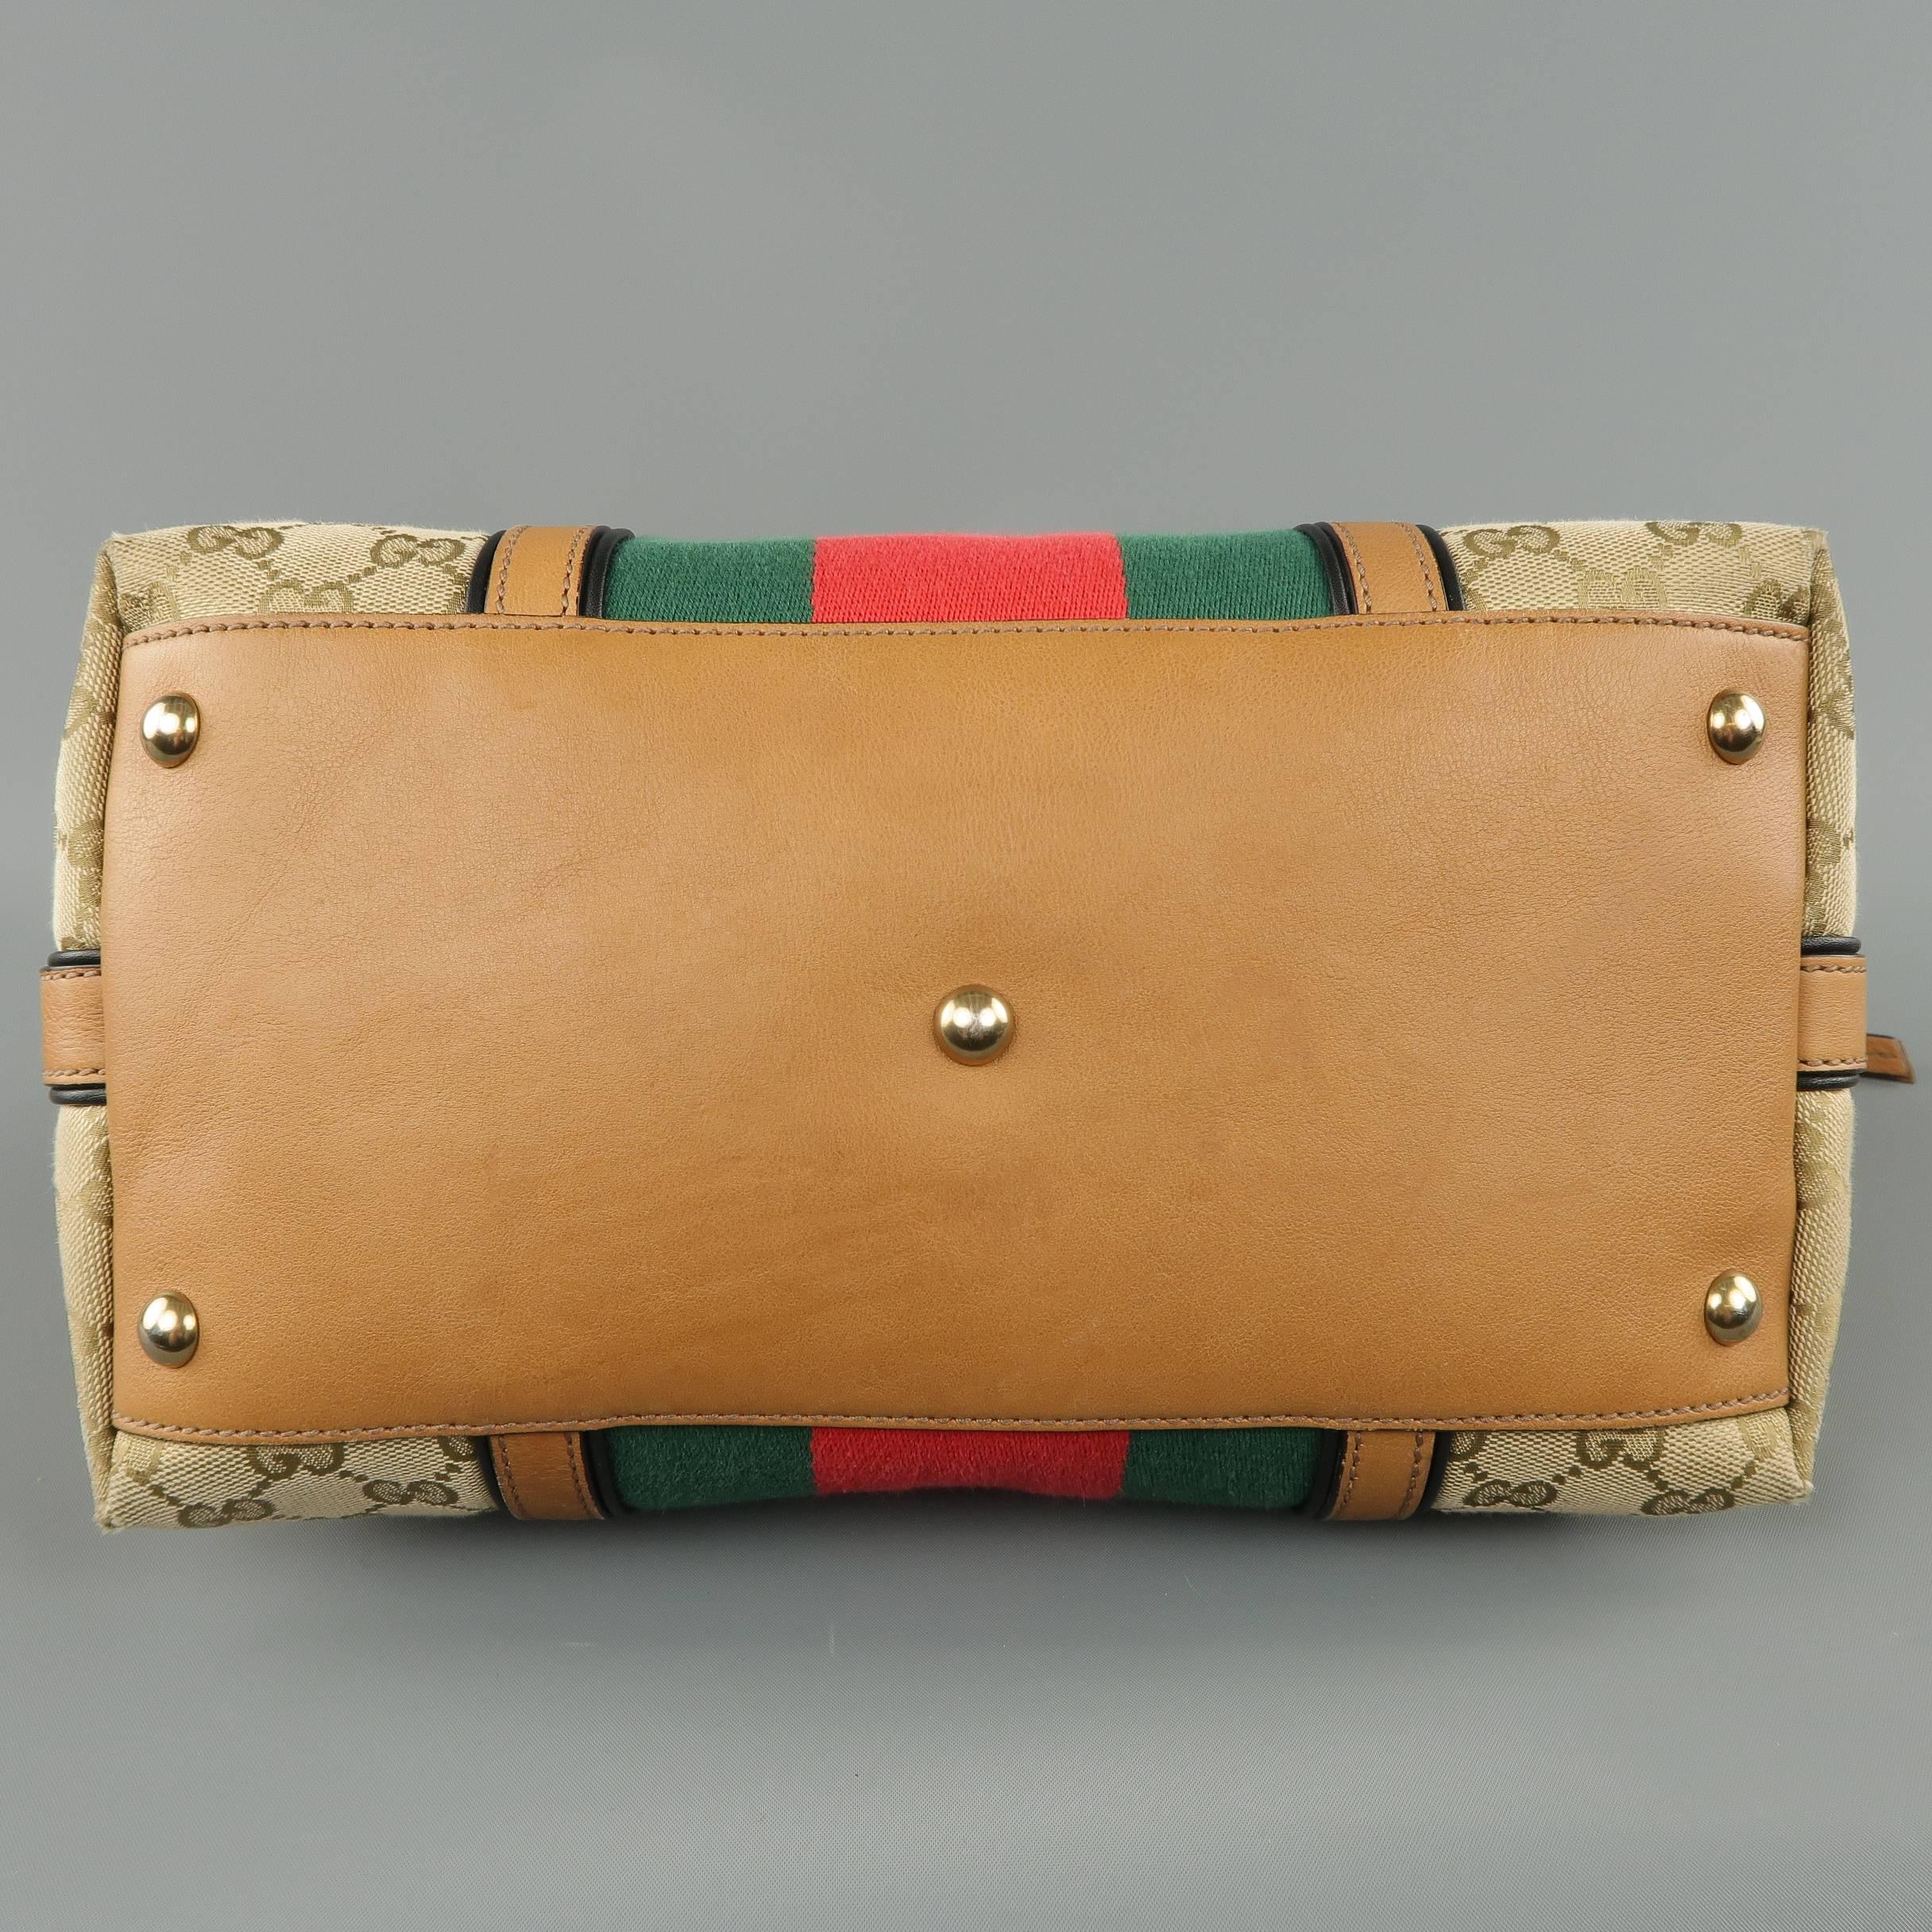 Gucci Monogram Canvas Tan Leather Green and Red Stripe Tassel Handbag 3